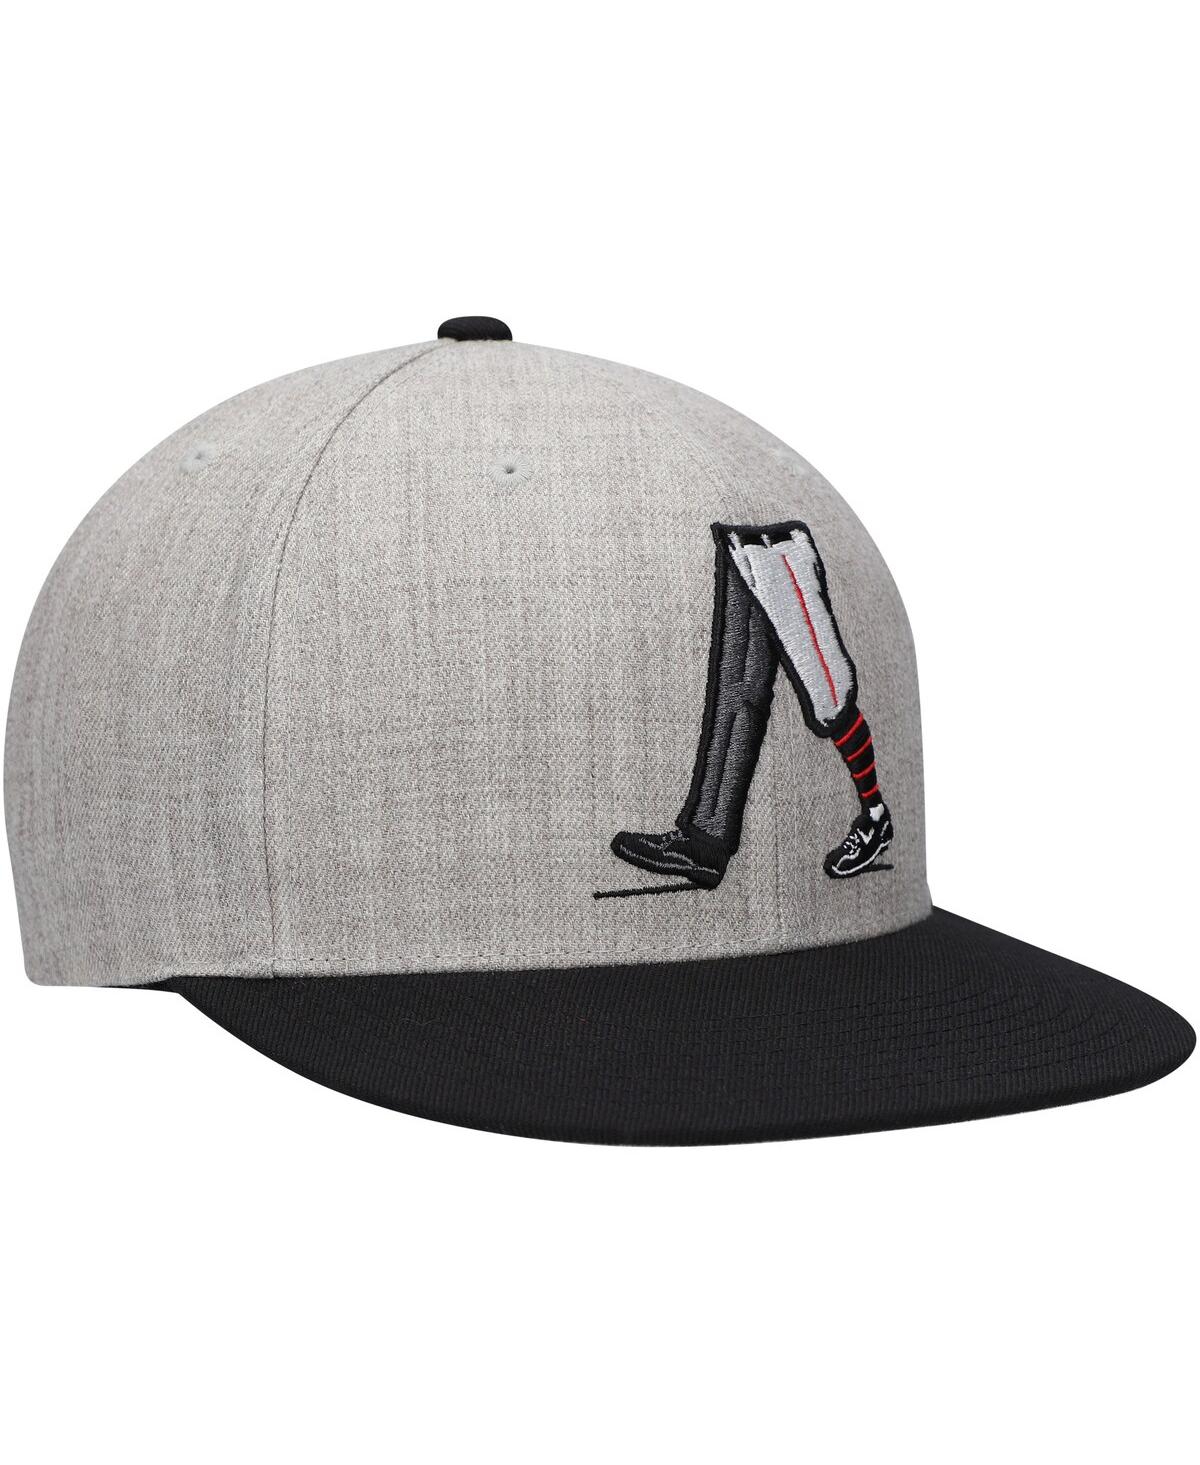 Shop Baseballism Men's  Heather Gray Field Of Dreams Moonlight Snapback Hat